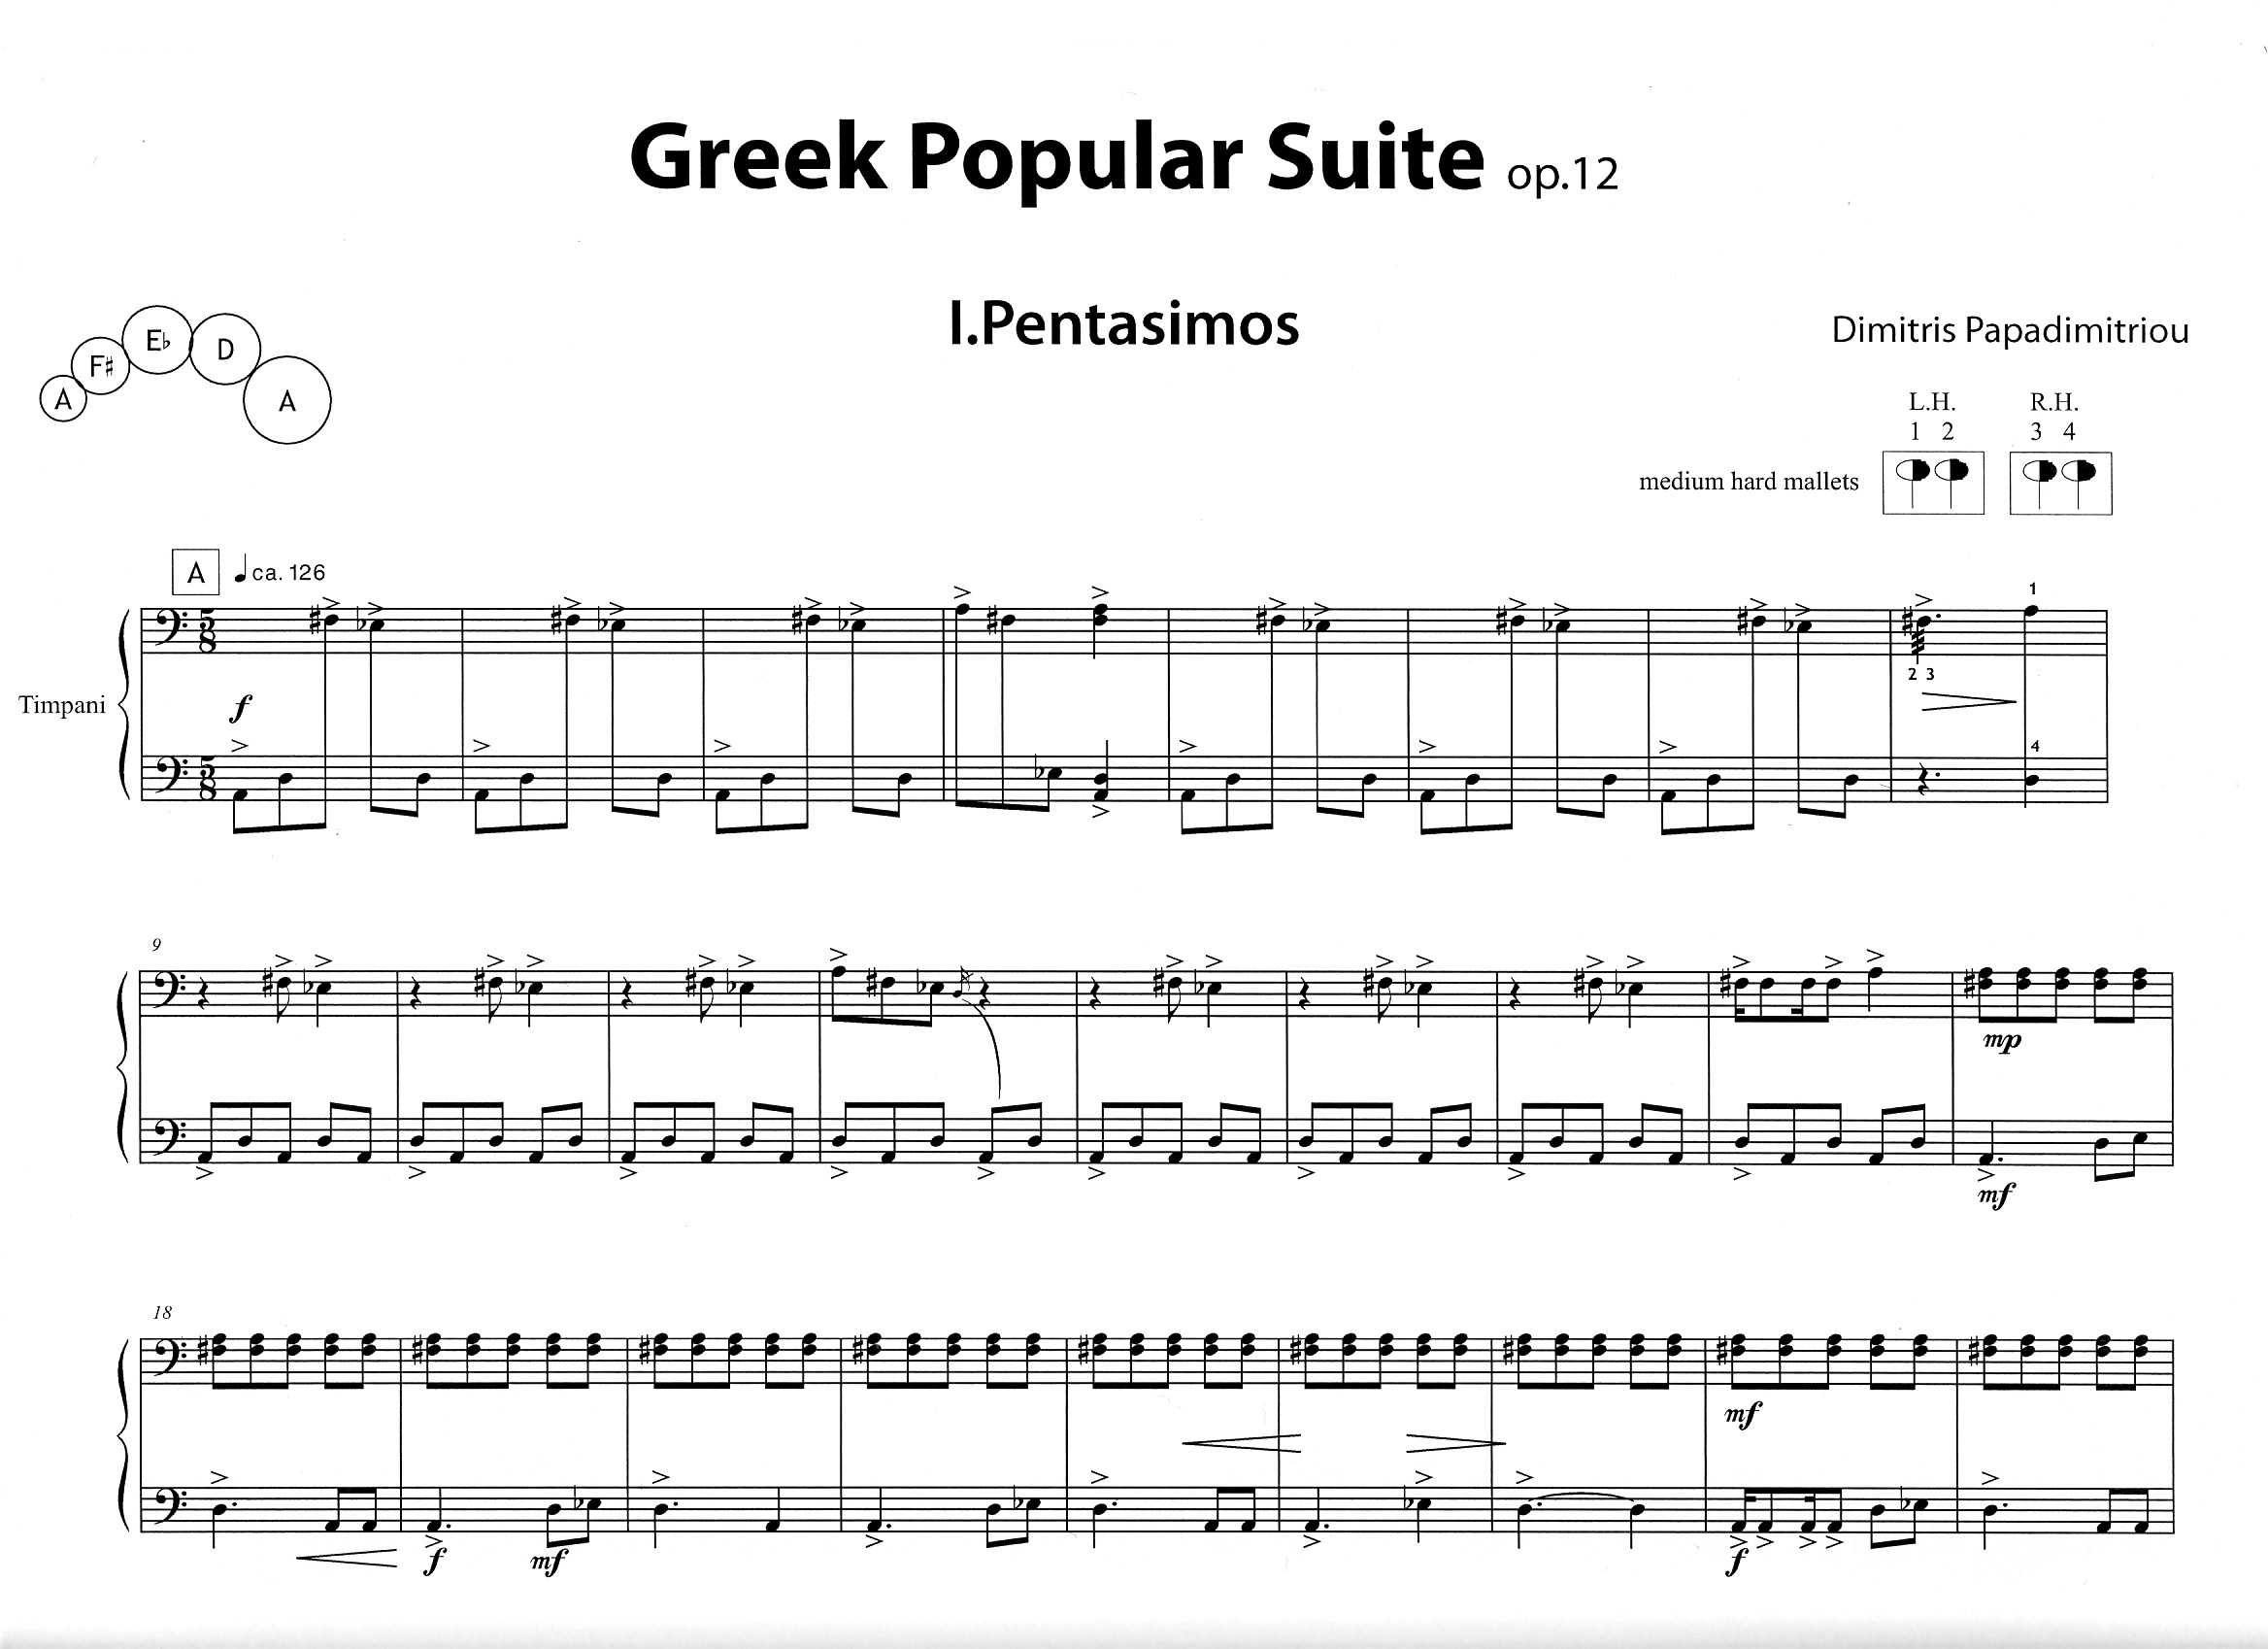 Greek Popular Suite op. 12 by Dmitris Papadimitriou